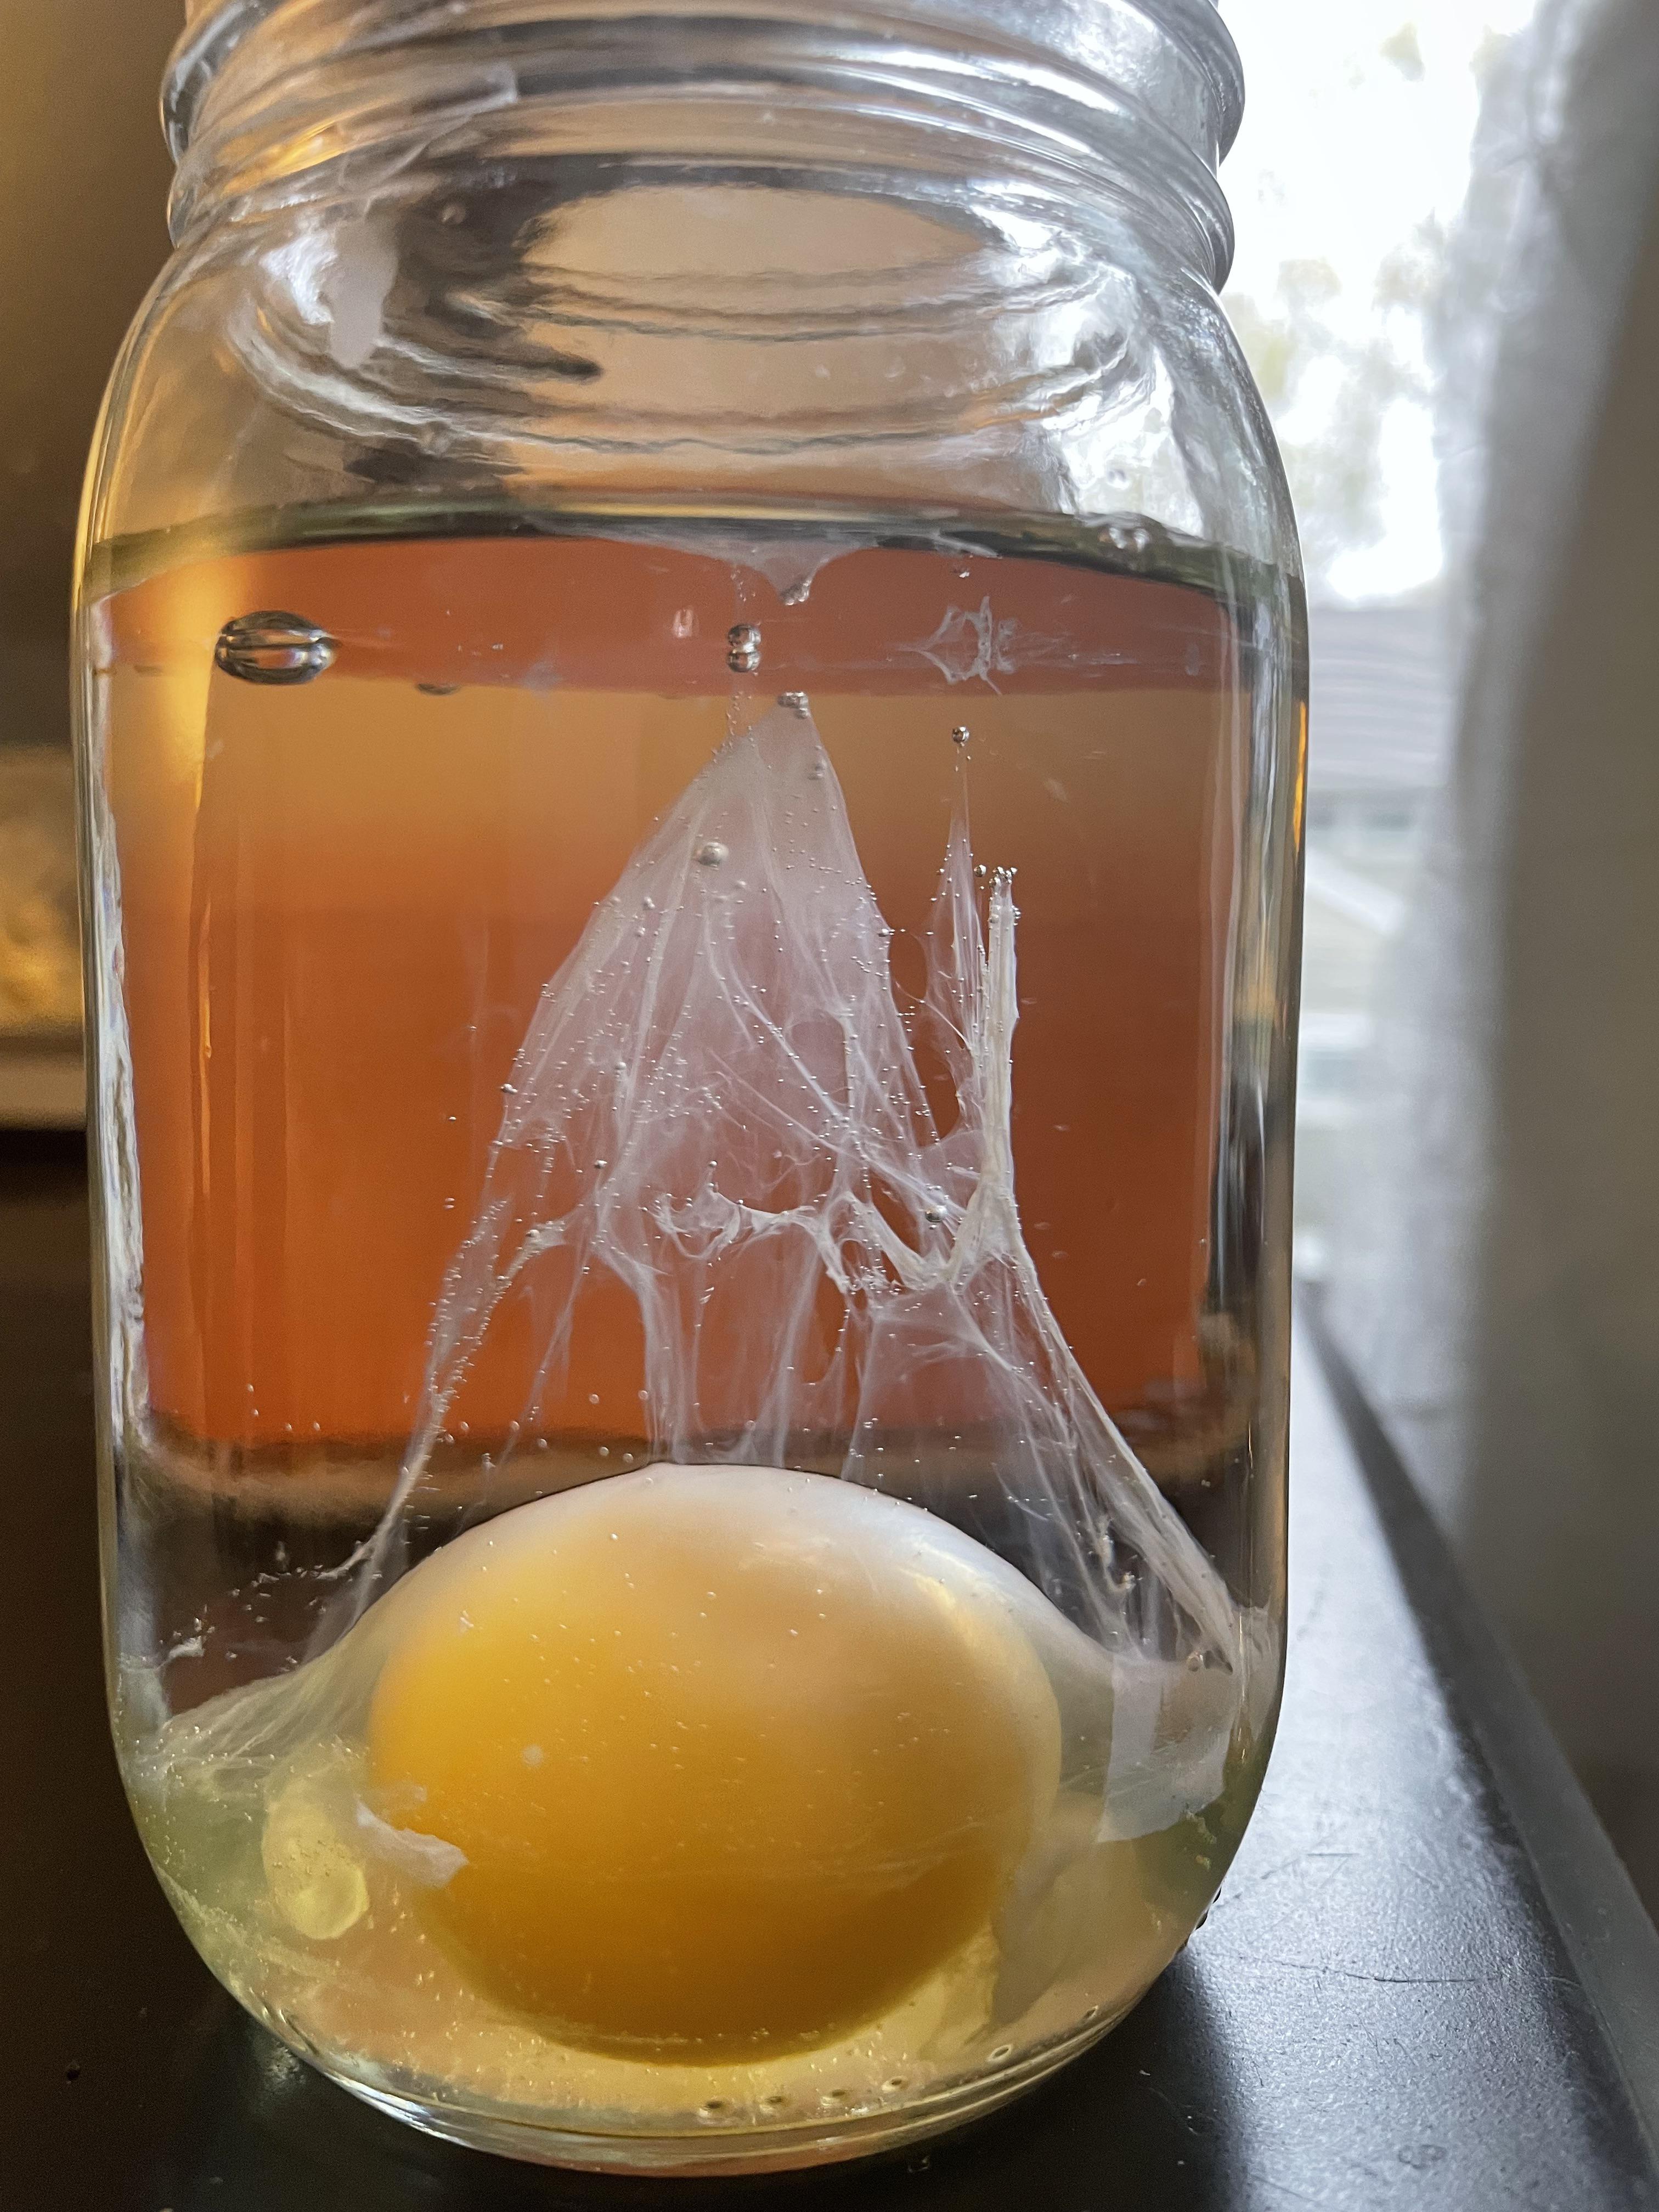 A raw egg inside a glass jar